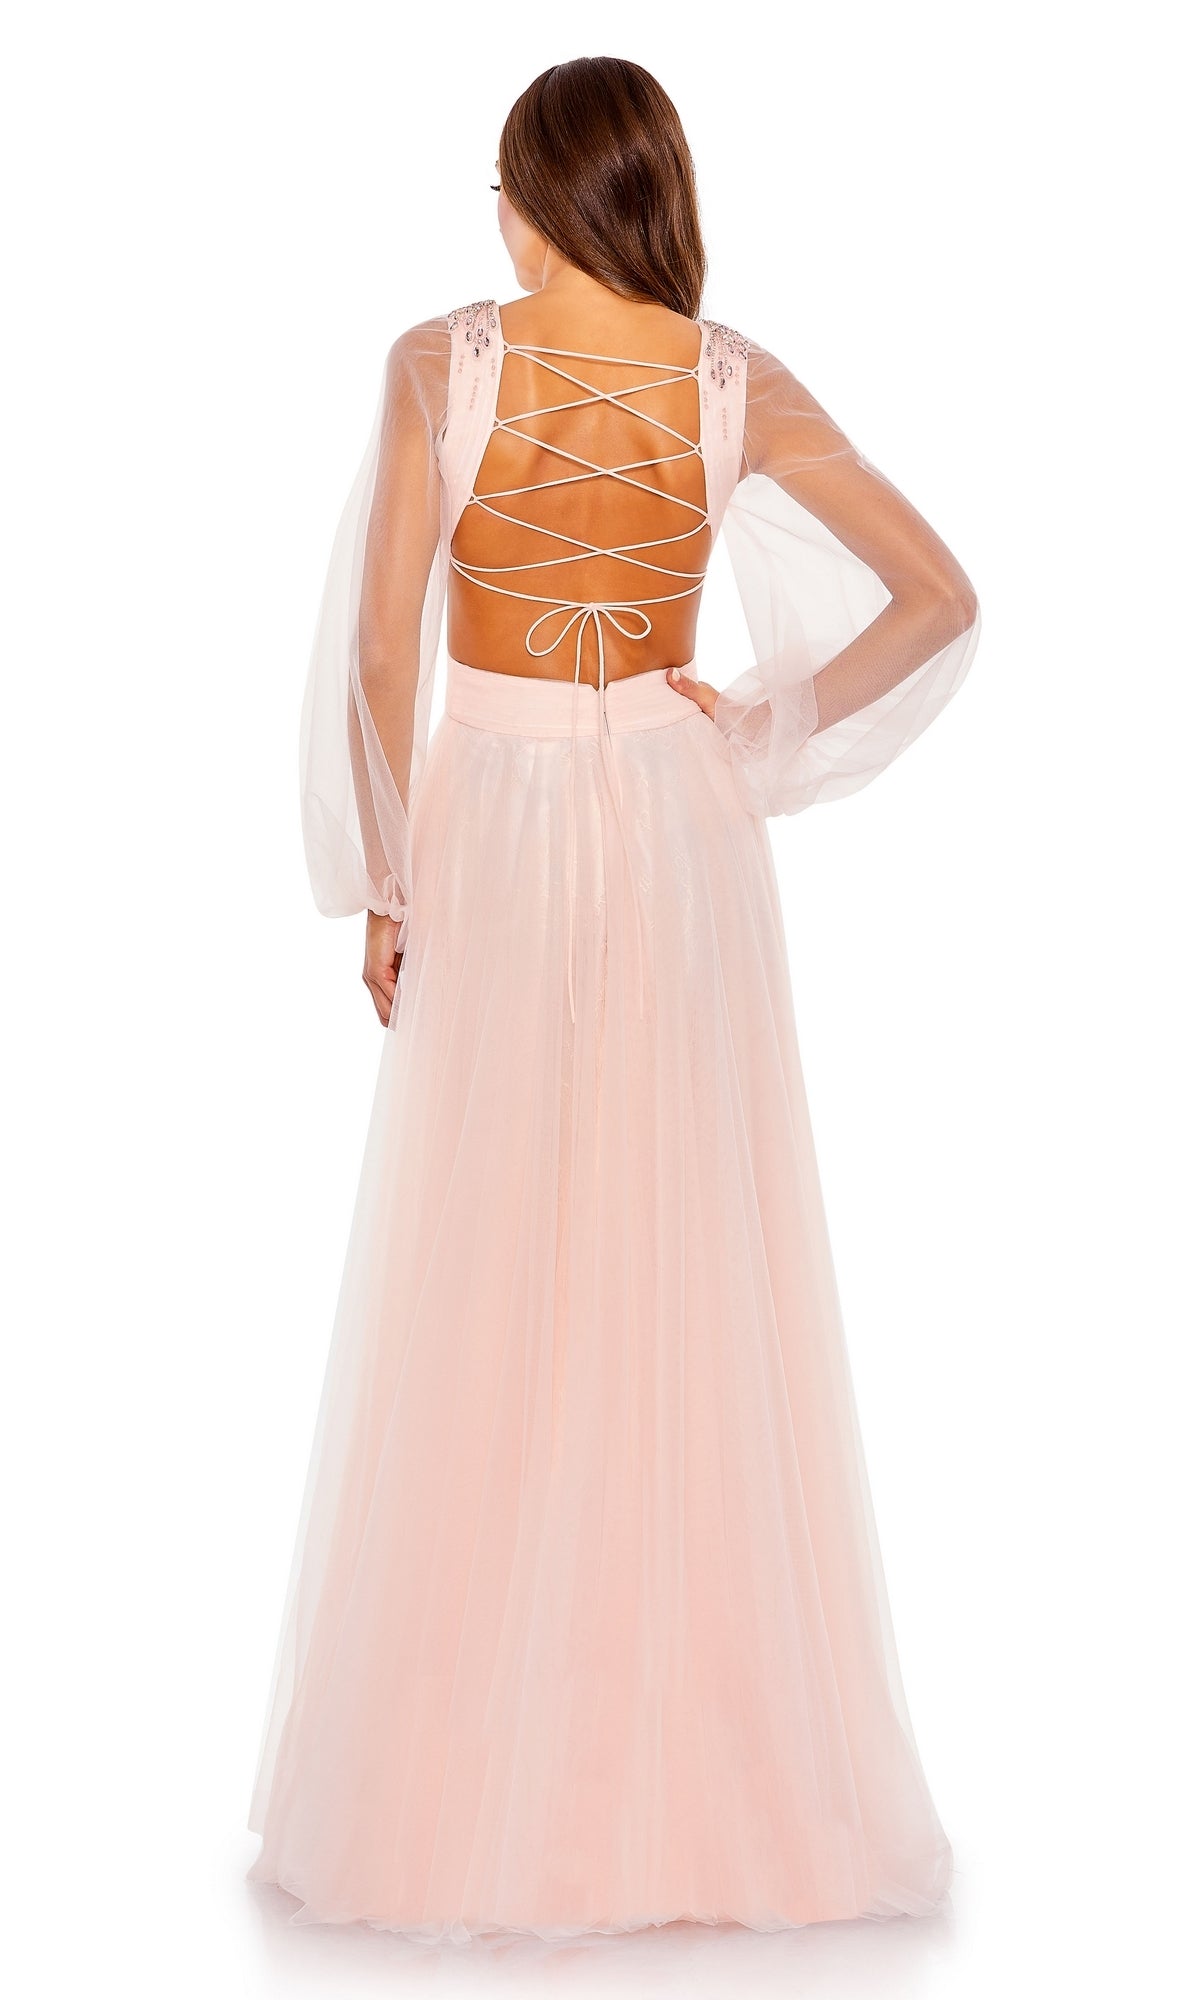 Long Formal Blush Pink Dress 70174 by Mac Duggal